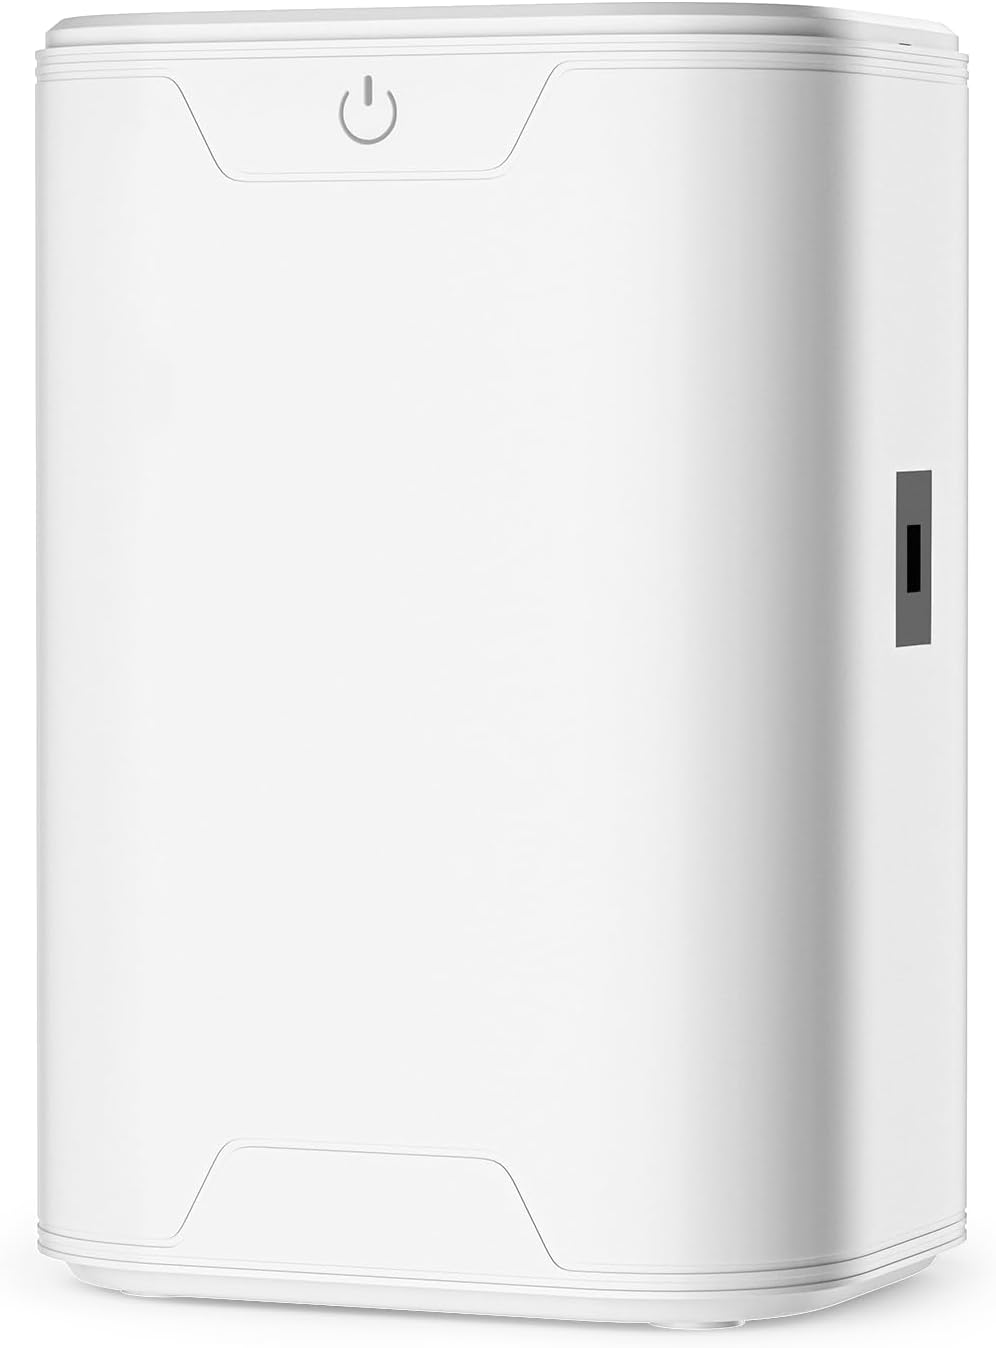 COYCYQI Mini Portable Dehumidifiers, 215 sq. ft 25oz Capacity Small Dehumidifier with Drain Hose and AUTO Shut-Off, Ultra Quiet for Bathroom, Bedroom, Closet, Wardrobe, Kitchen, RV,Home